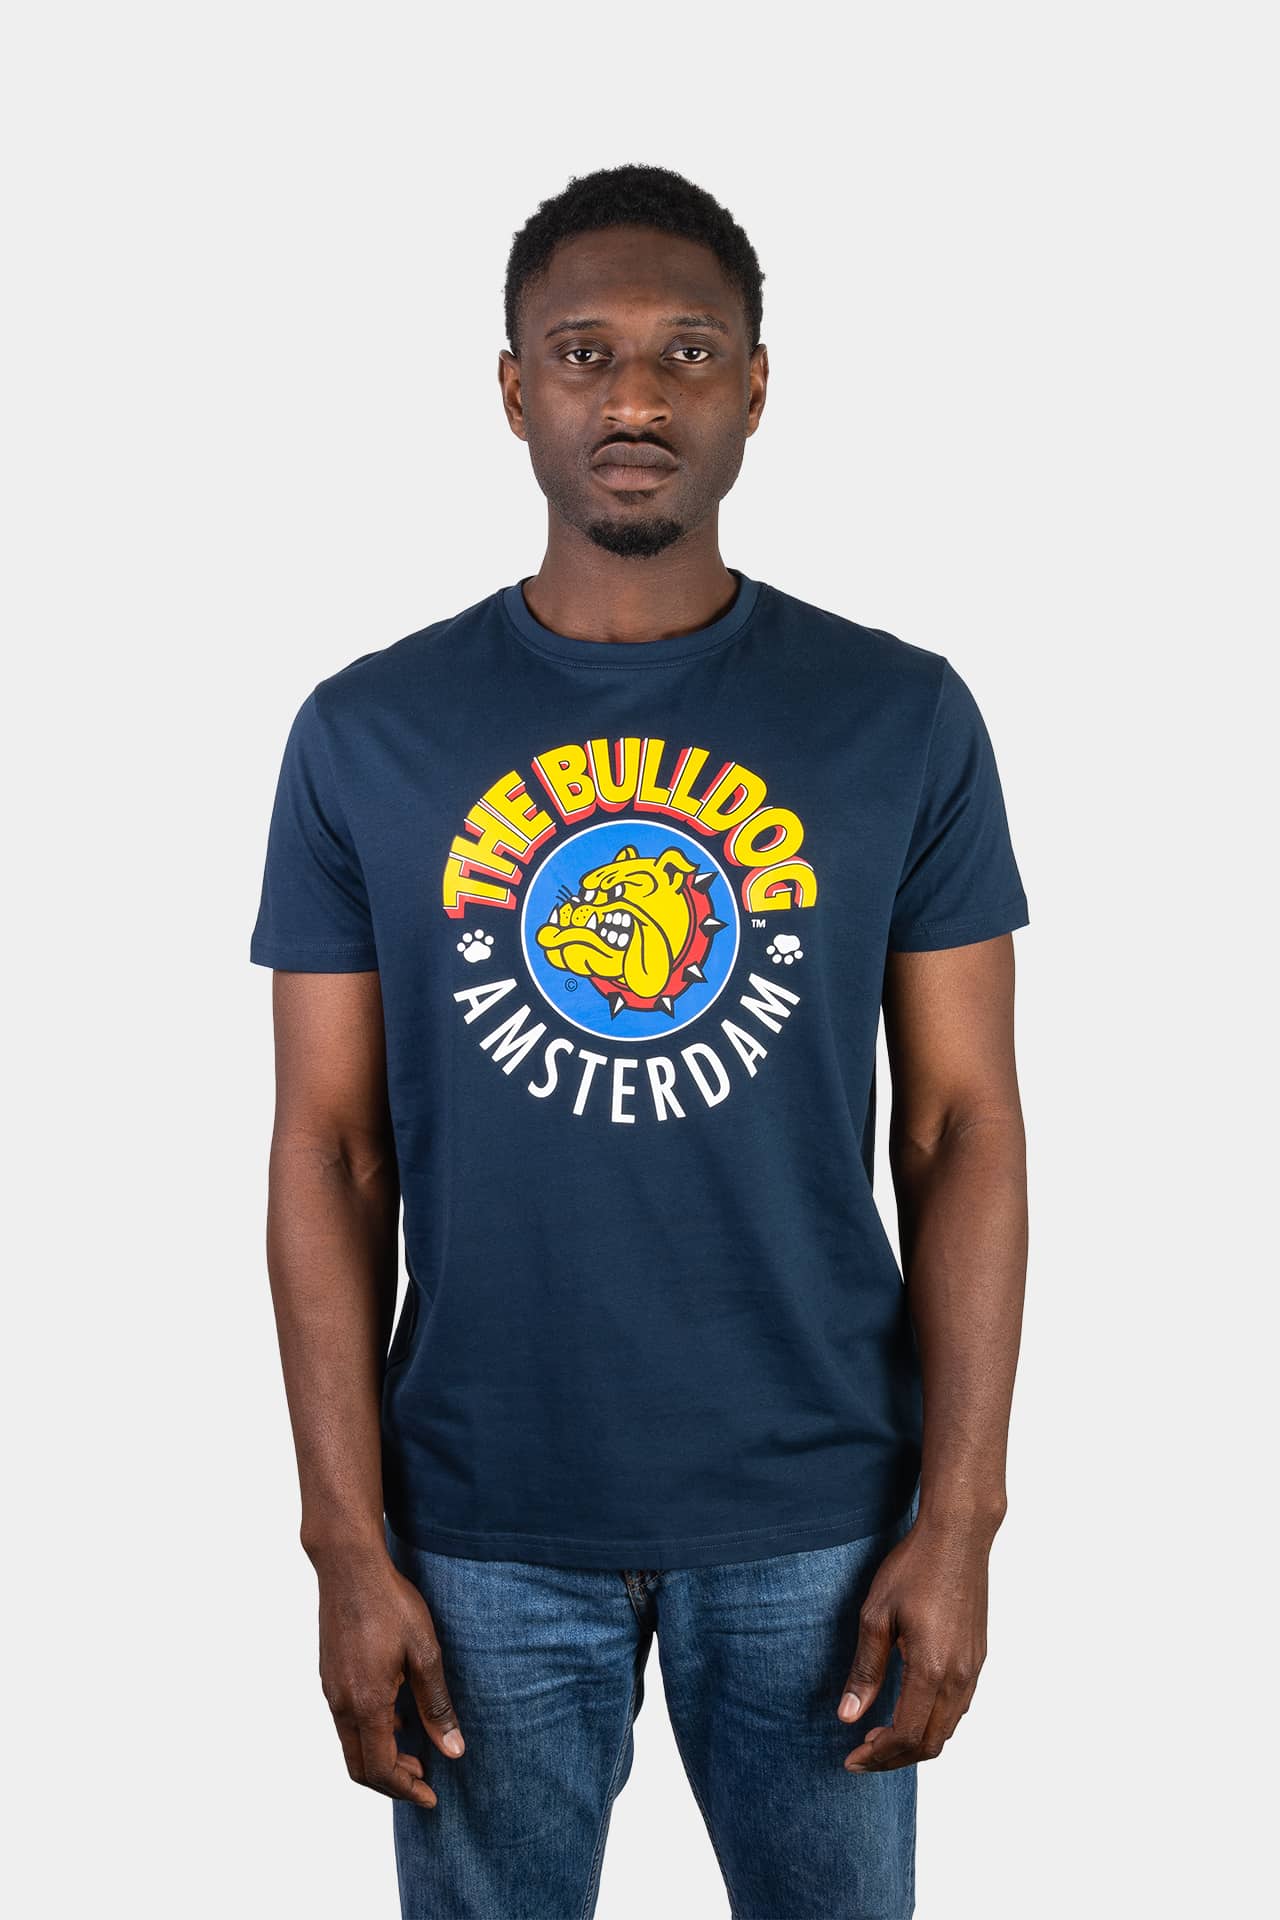 The Bulldog Cafe Amsterdam T-shirt Tee Shirt Cute Cotton Natural